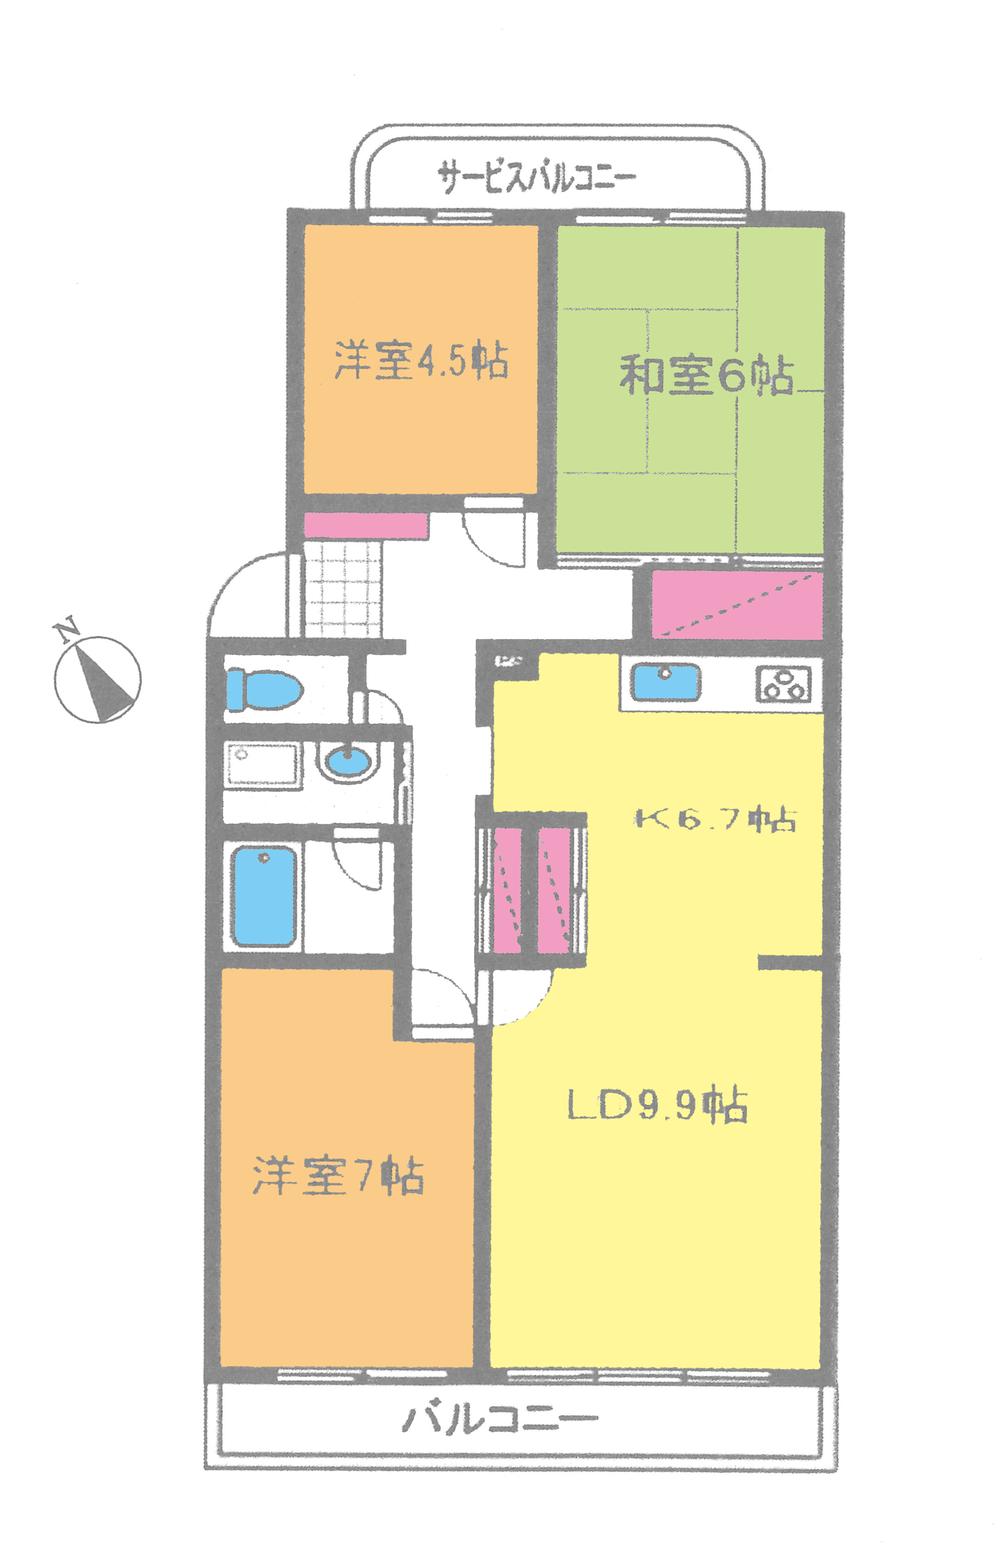 Floor plan. 3LDK, Price 12.8 million yen, Occupied area 76.38 sq m , Balcony area 11.79 sq m floor plan